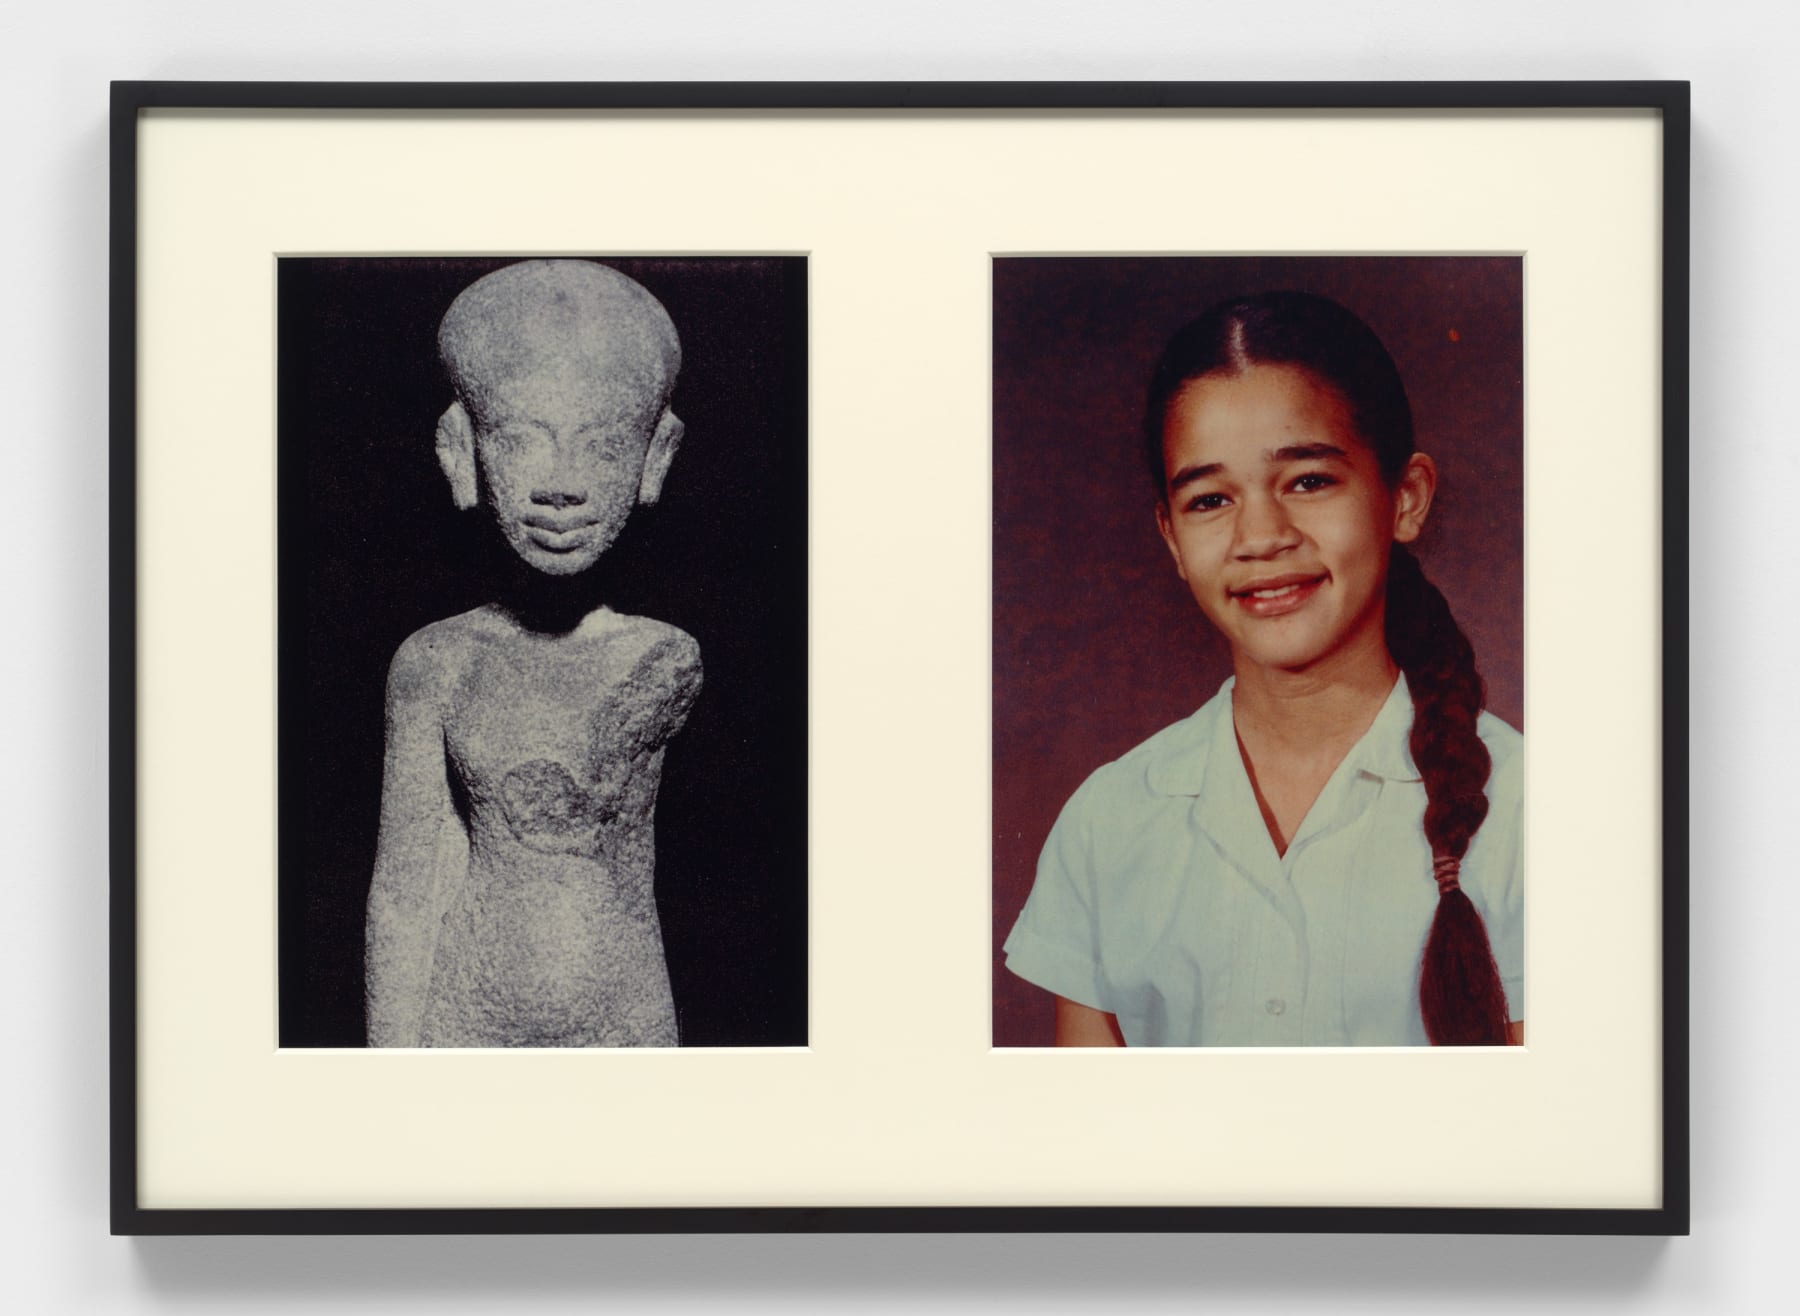 Lorraine O'Grady, Miscegenated Family Album (Young Princesses), L: Nefertiti's daughter, Ankhesenpaaten; R: Devonia's daughter, Candace, 1980/1994